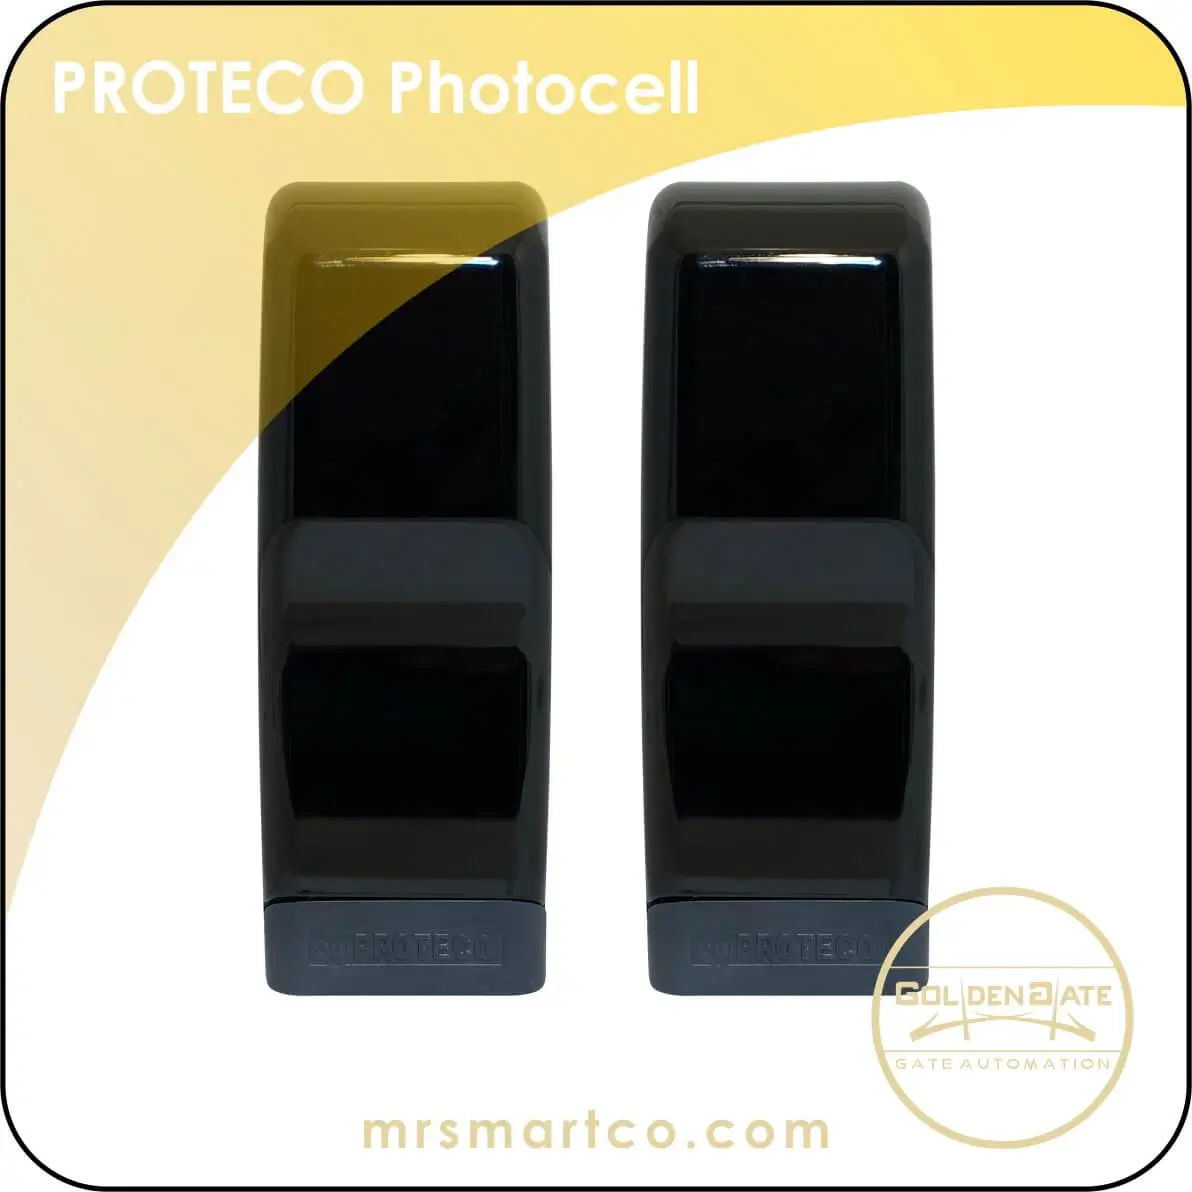 Proteco Photocell